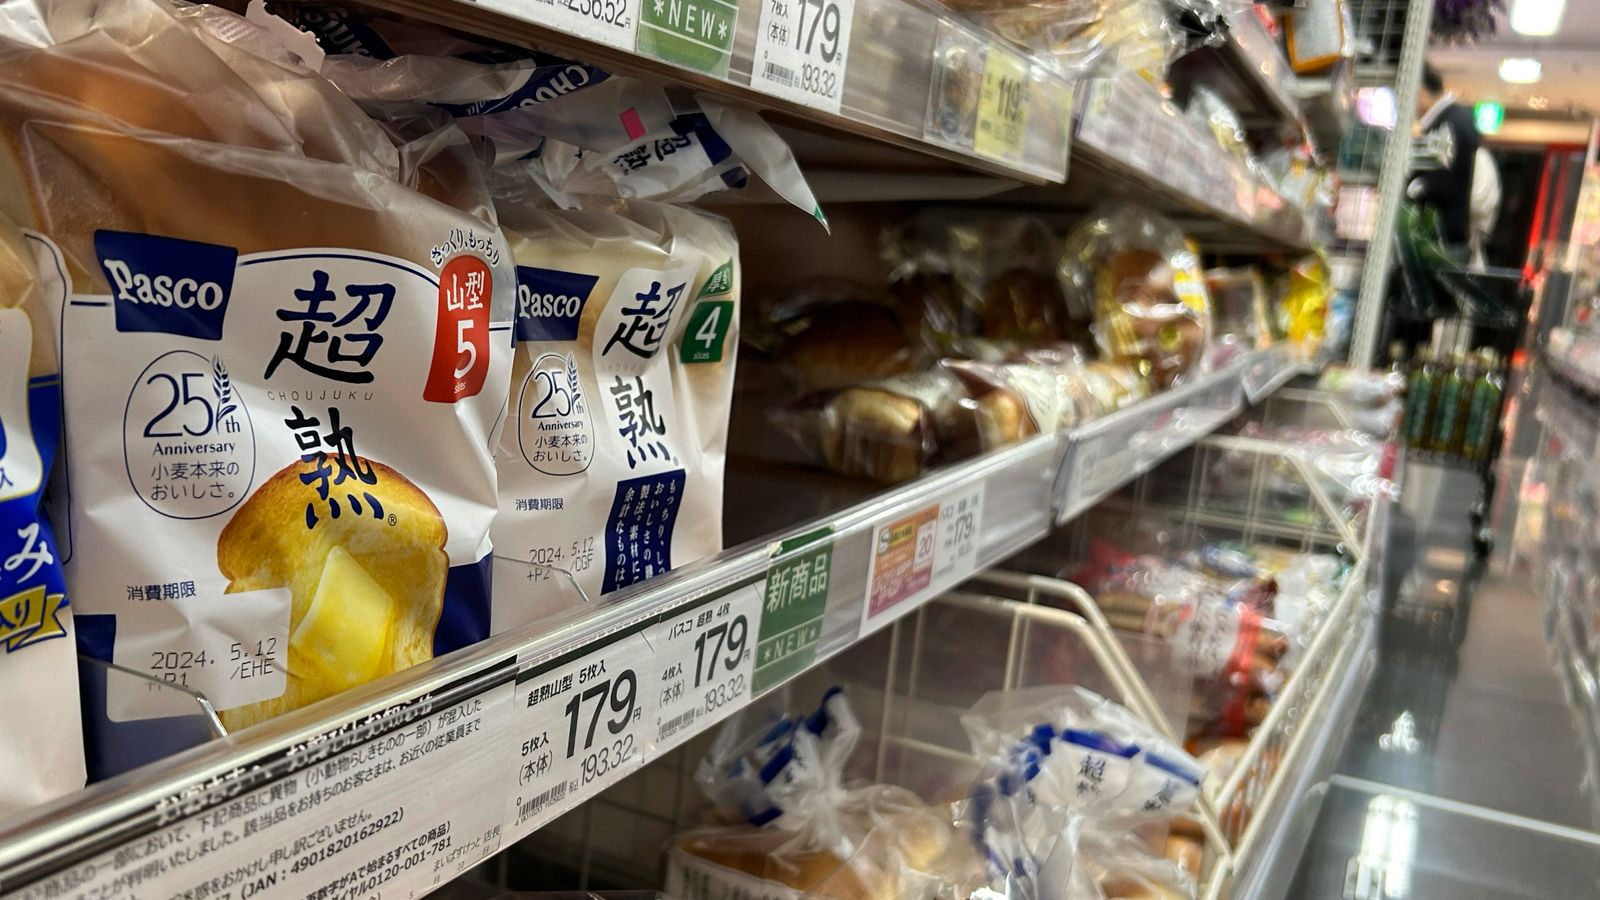 Pasco Shikishima Corp която произвежда хляба каза че 104 000